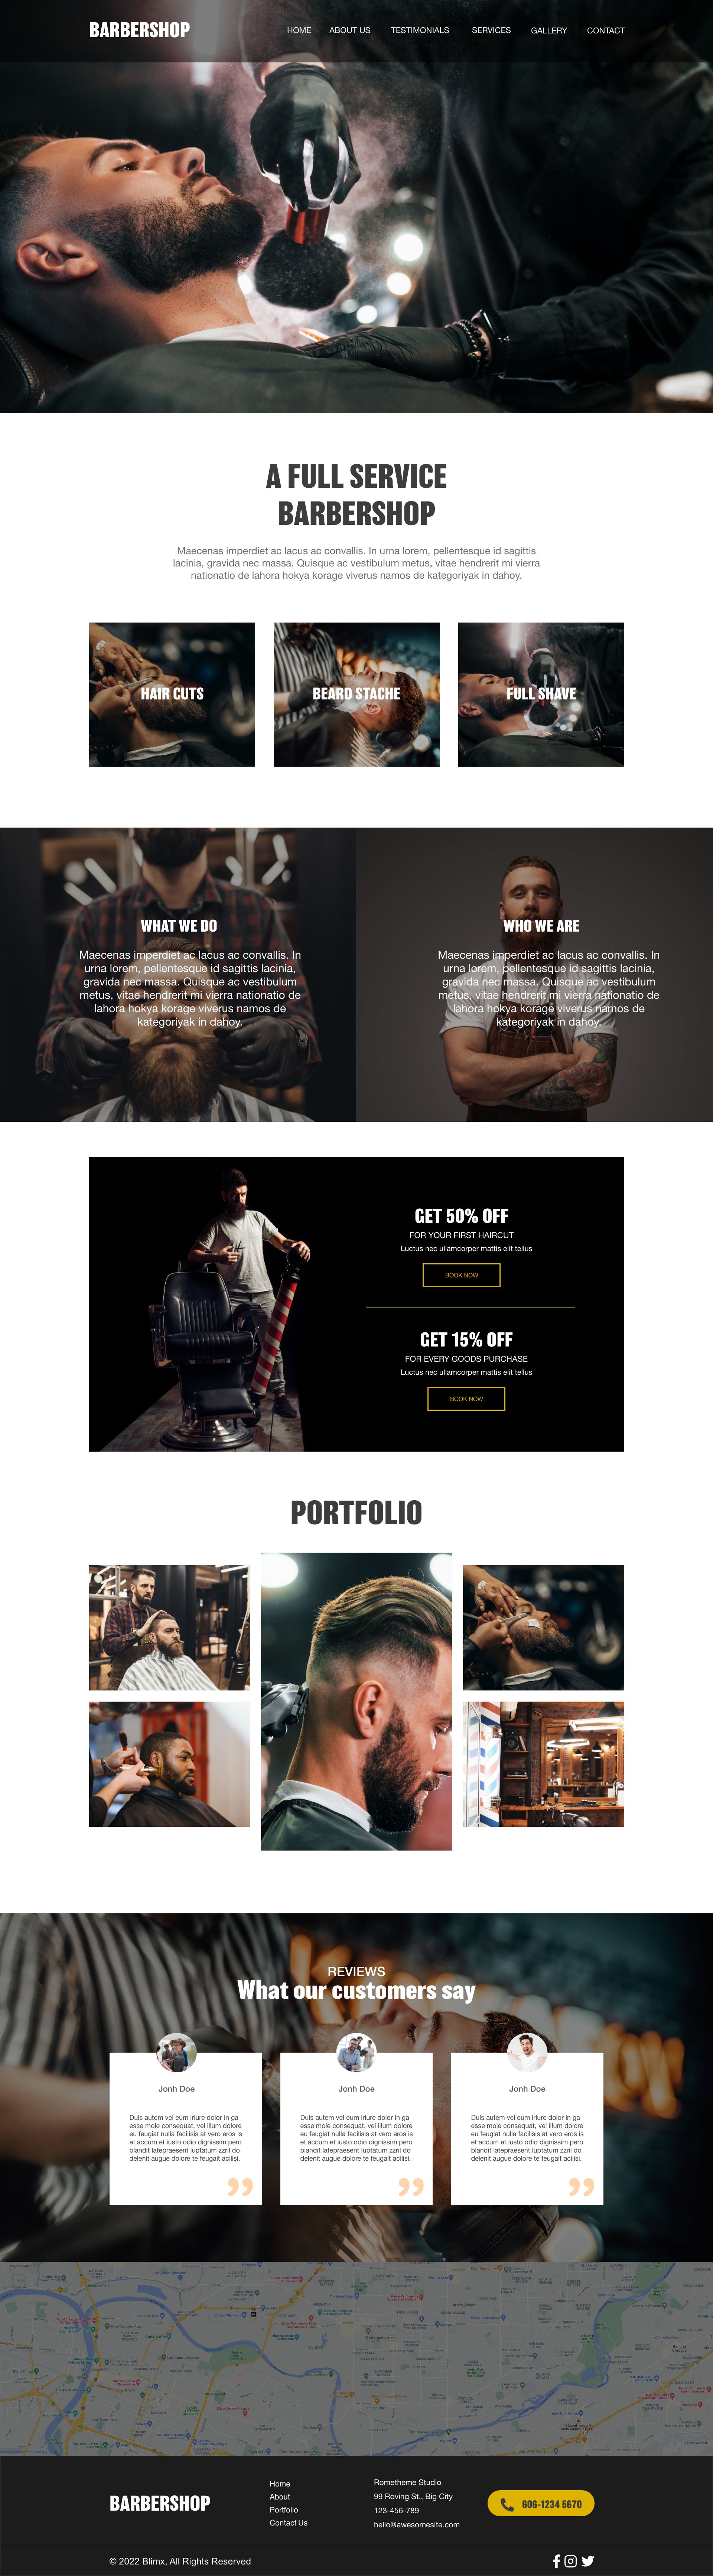 Haircut And Beard Website Design